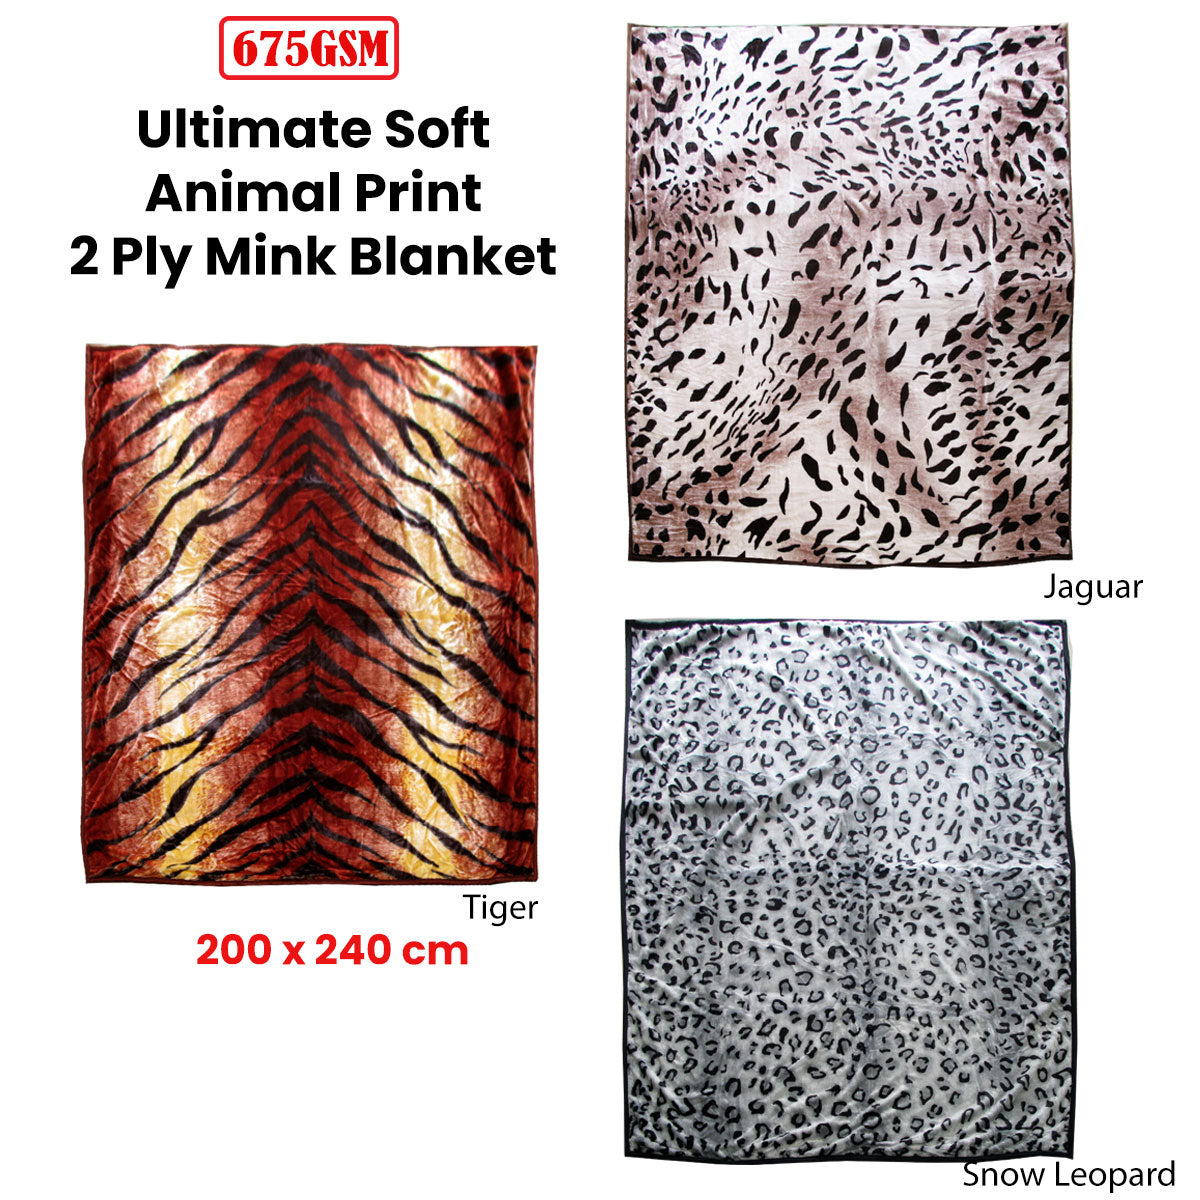 675gsm 2 Ply Animal Print Faux Mink Blanket Queen 200x240 cm Jaguar - Newstart Furniture